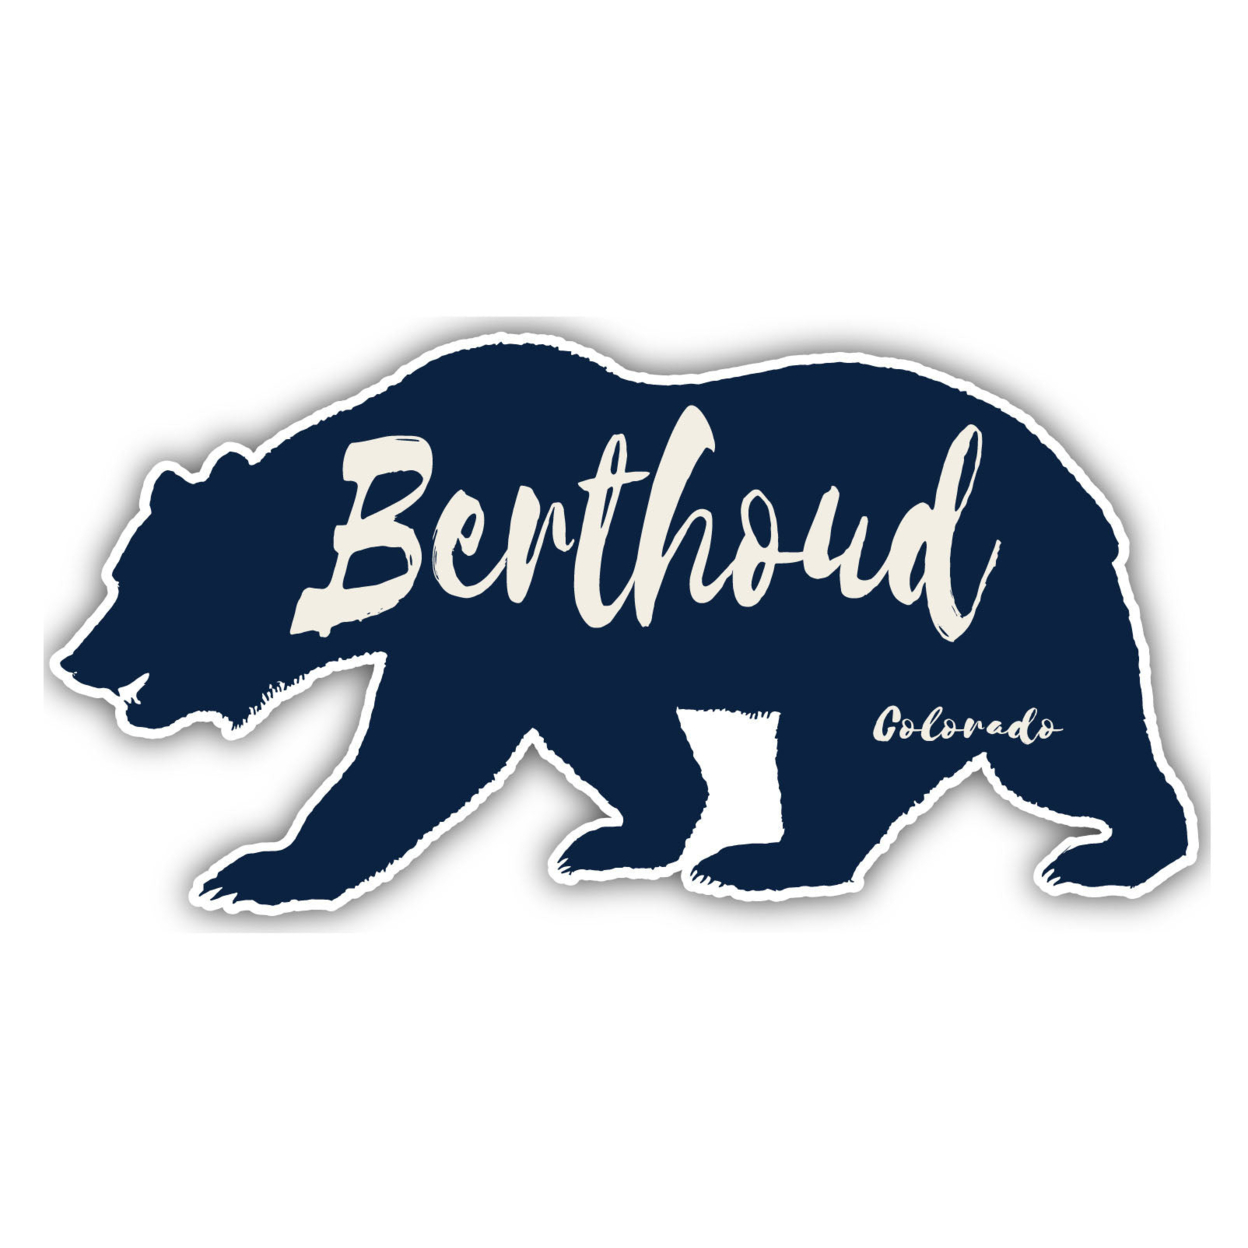 Berthoud Colorado Souvenir Decorative Stickers (Choose Theme And Size) - 4-Pack, 10-Inch, Tent